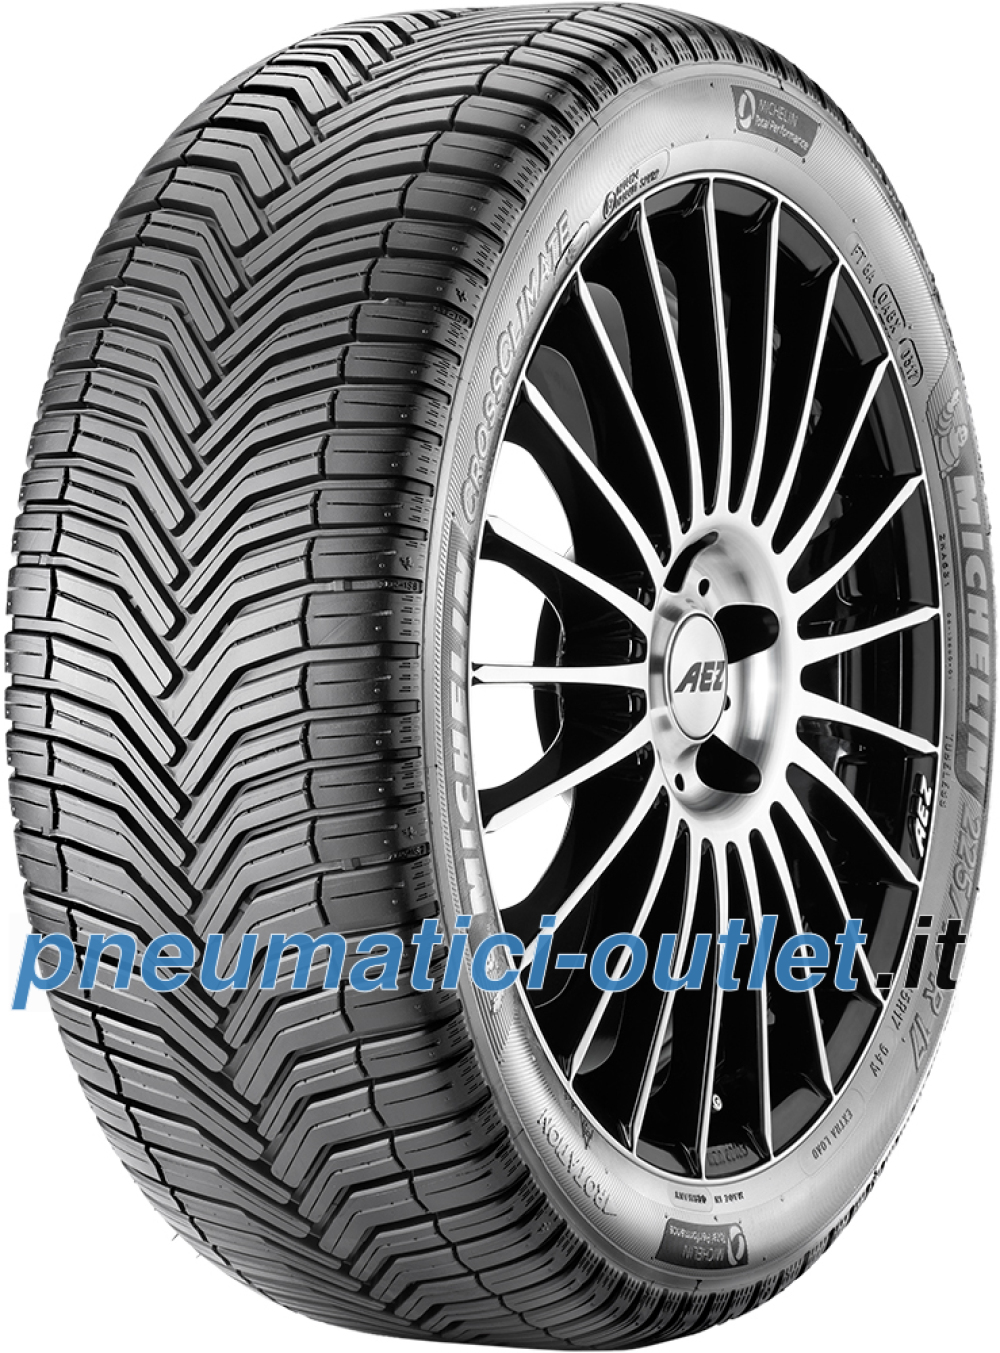 https://image.delti.com/tyre-pictures/1000/Brands/Michelin/113/Profil_CrossClimate.jpg